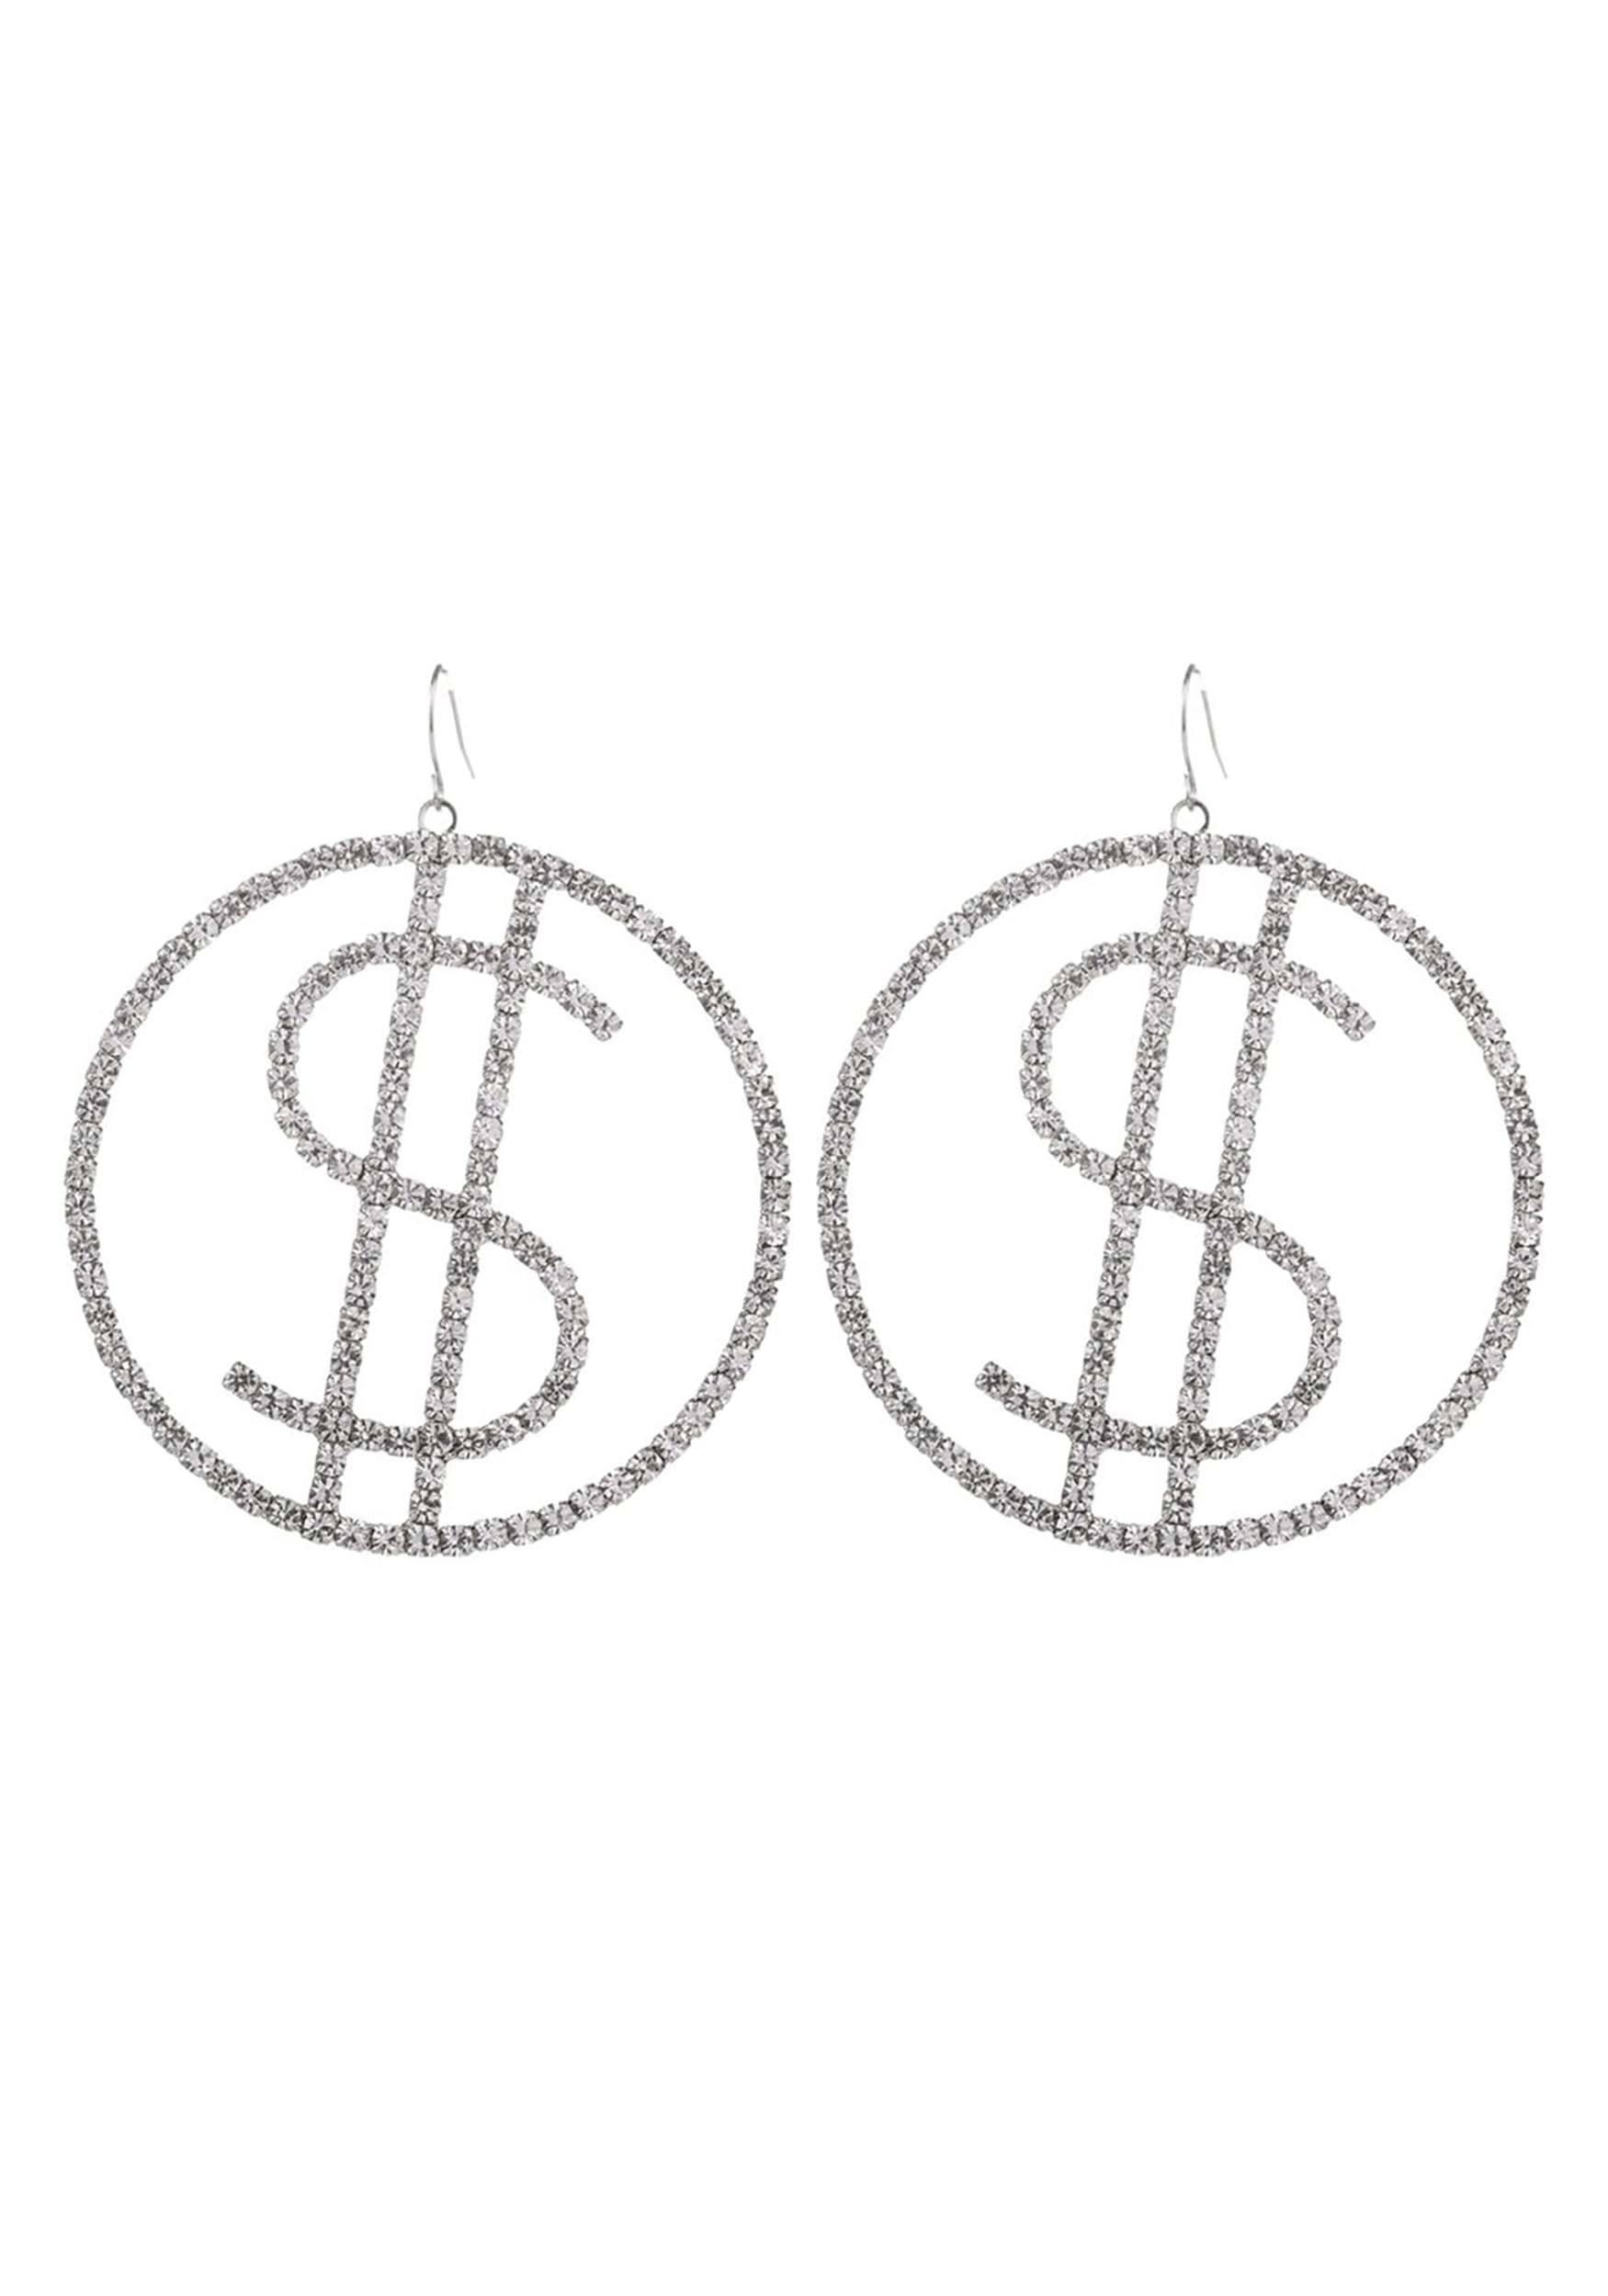 Rhinestone Dollar Sign Earrings